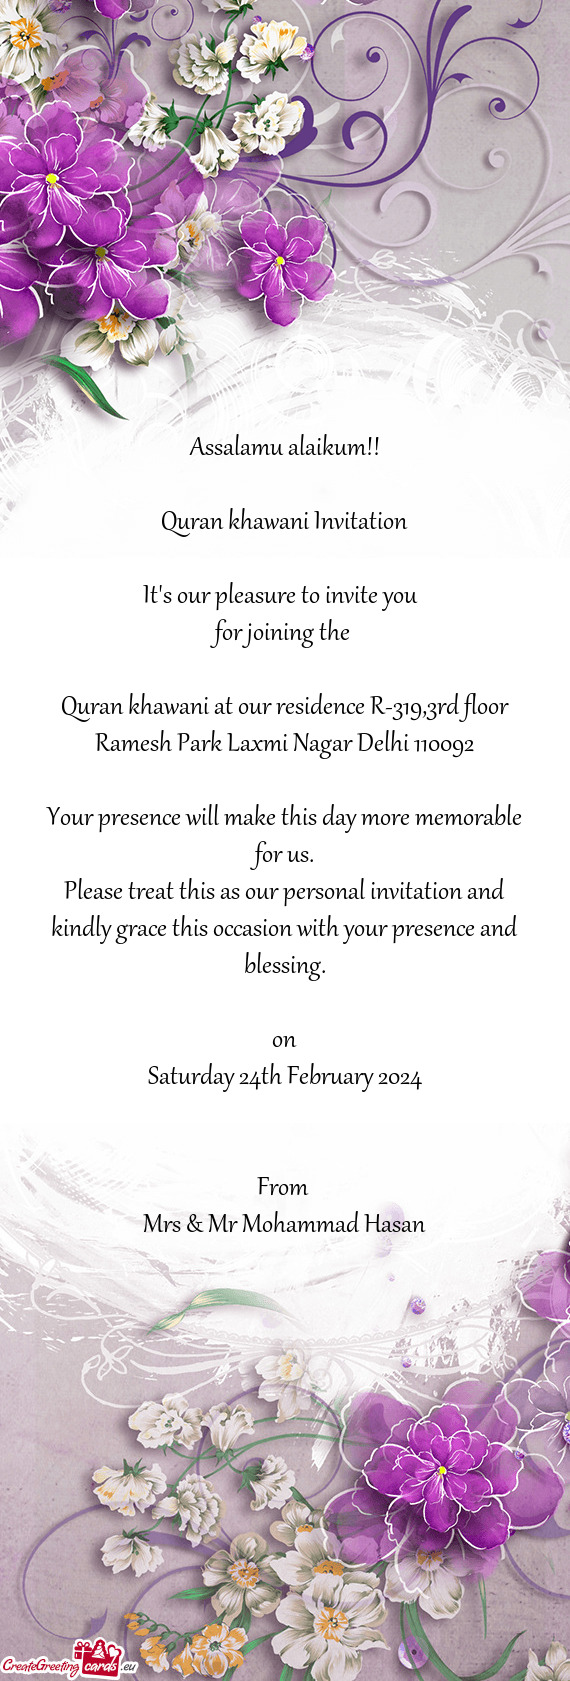 Quran khawani at our residence R-319,3rd floor Ramesh Park Laxmi Nagar Delhi 110092